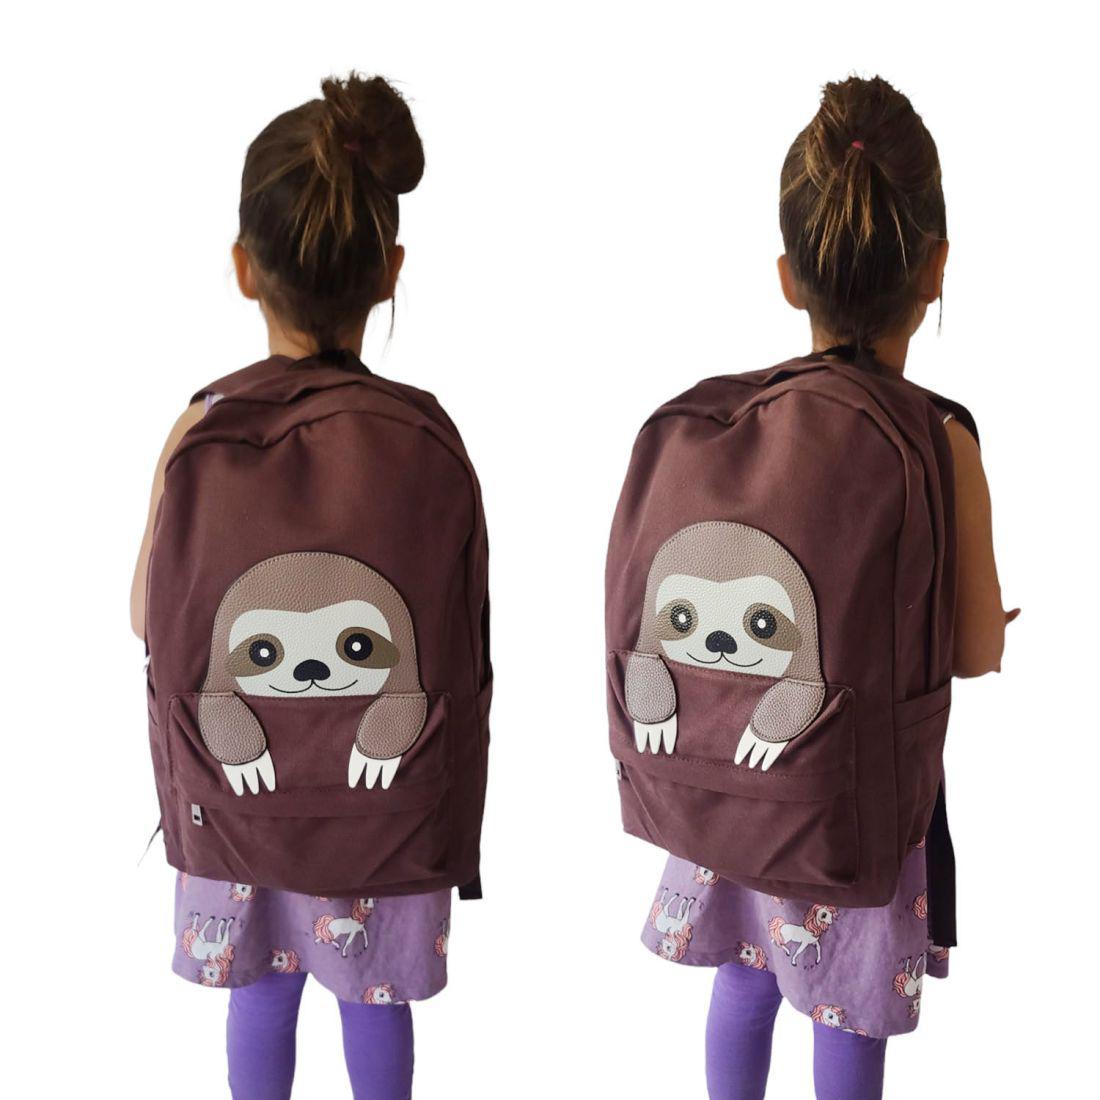 Empire Cove Canvas School Backpack Peeking Fox Dog Cat Sloth Shark Book Bag